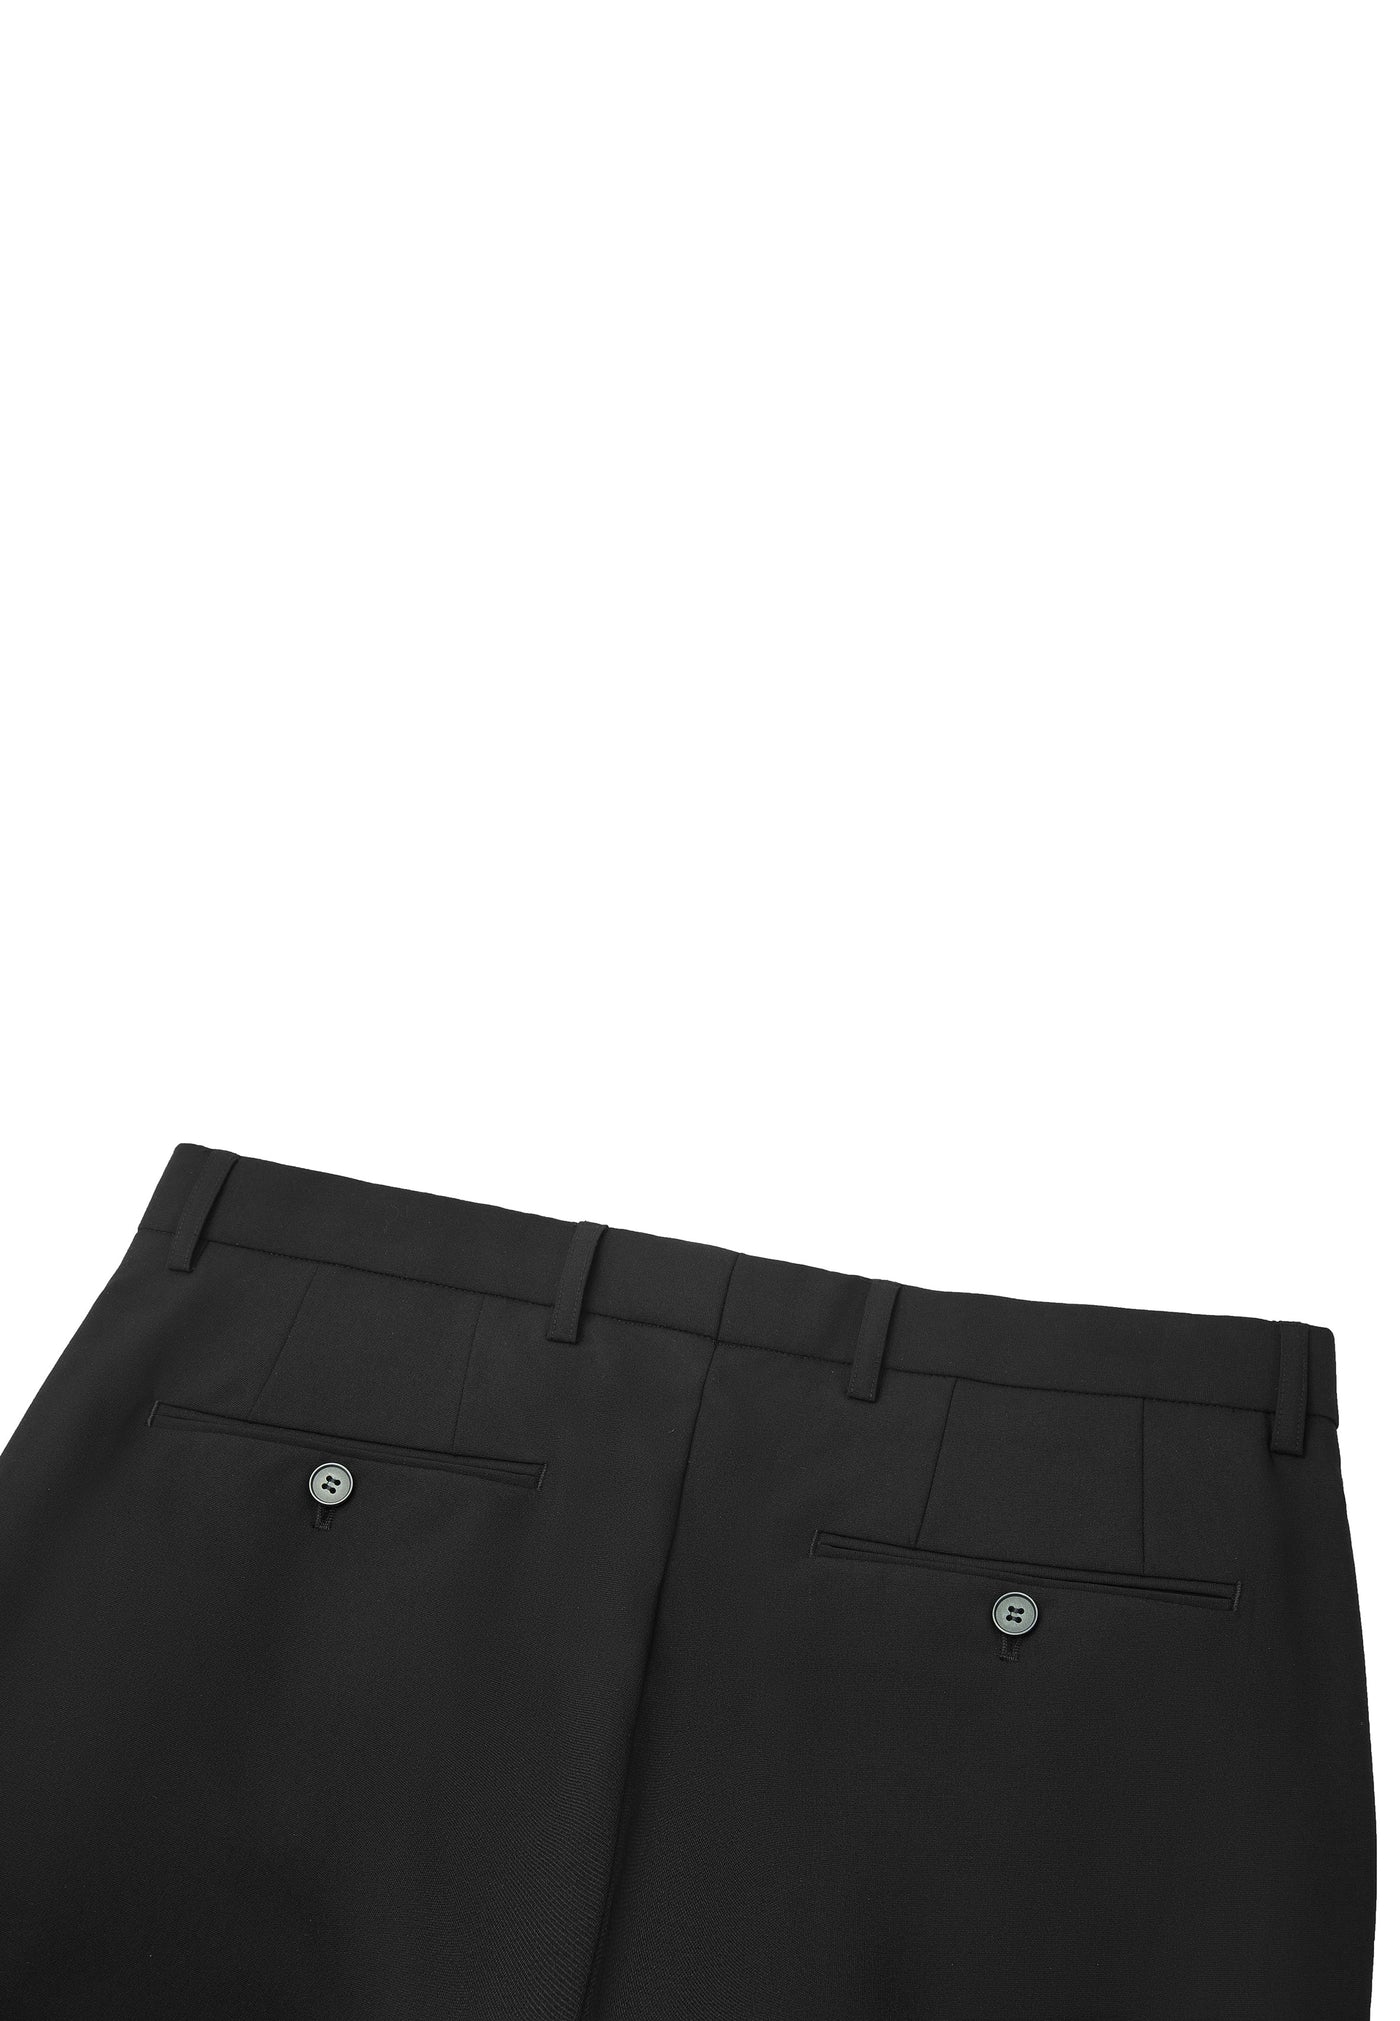 Men Clothing Multi-Way Stretch Anti-Bacterial Suit Pants Regular Fit